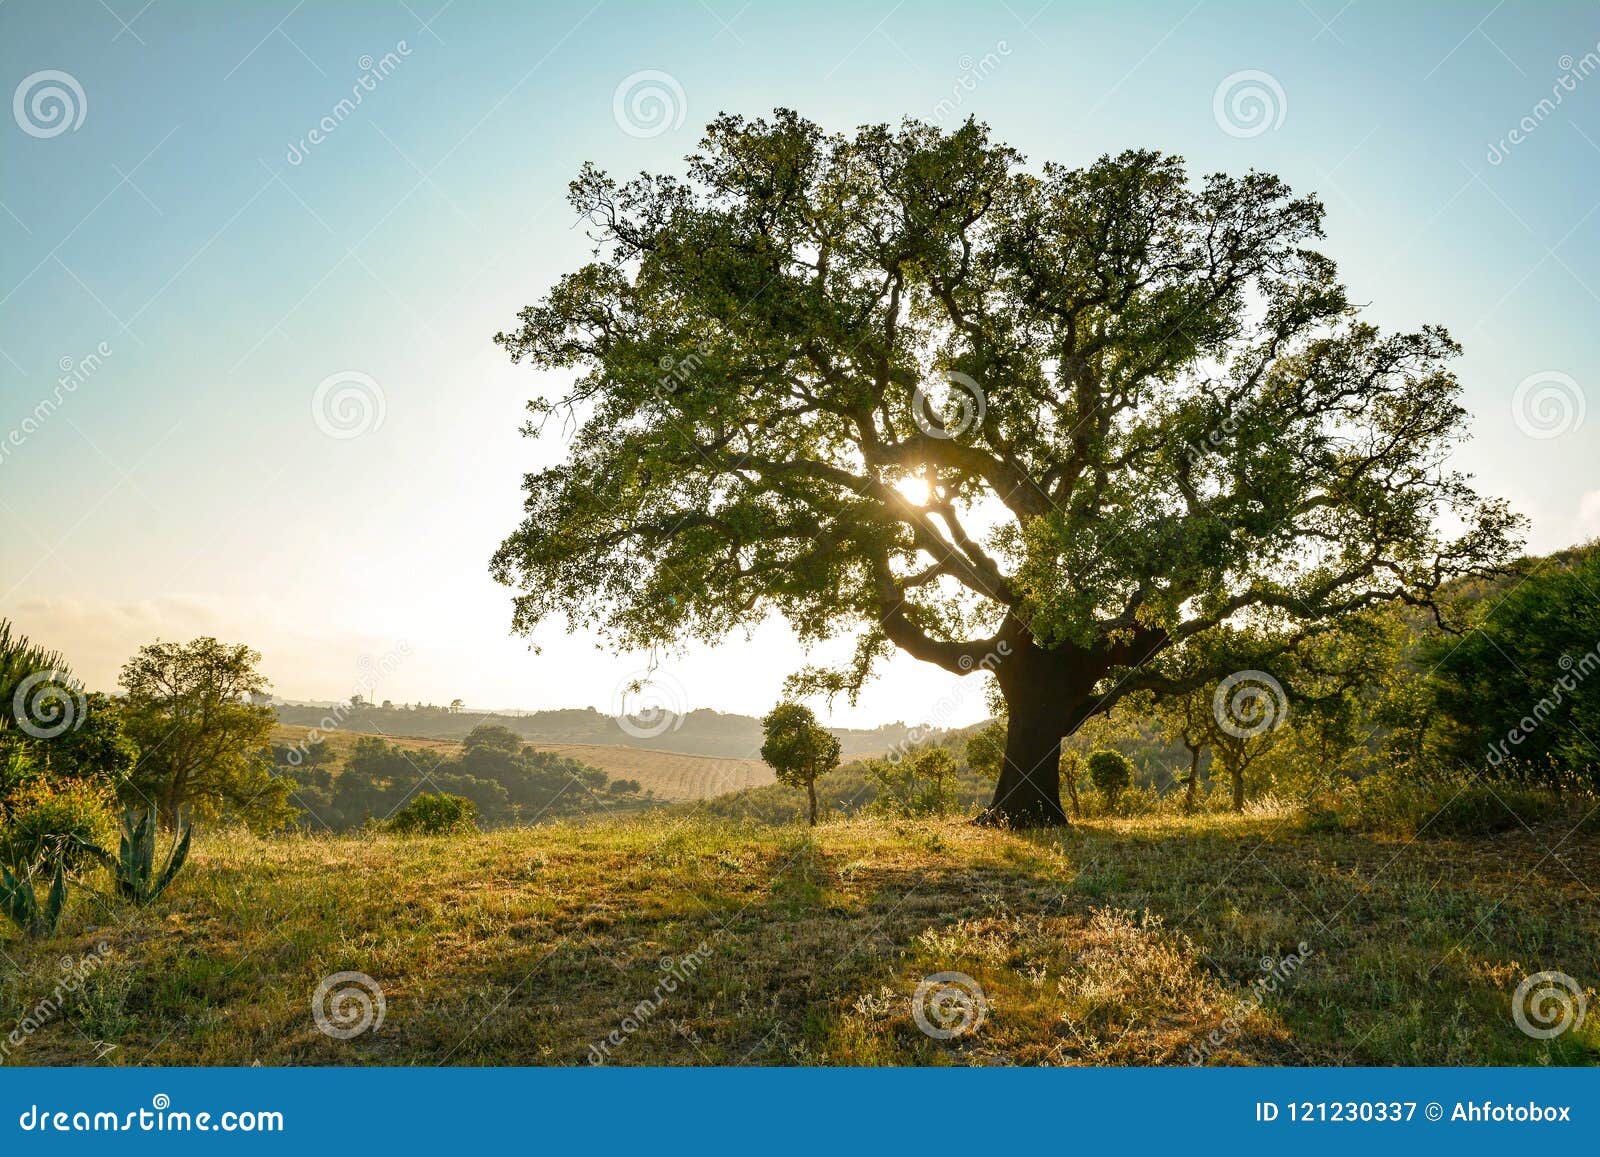 cork oak tree quercus suber and mediterranean landscape in evening sun, alentejo portugal europe